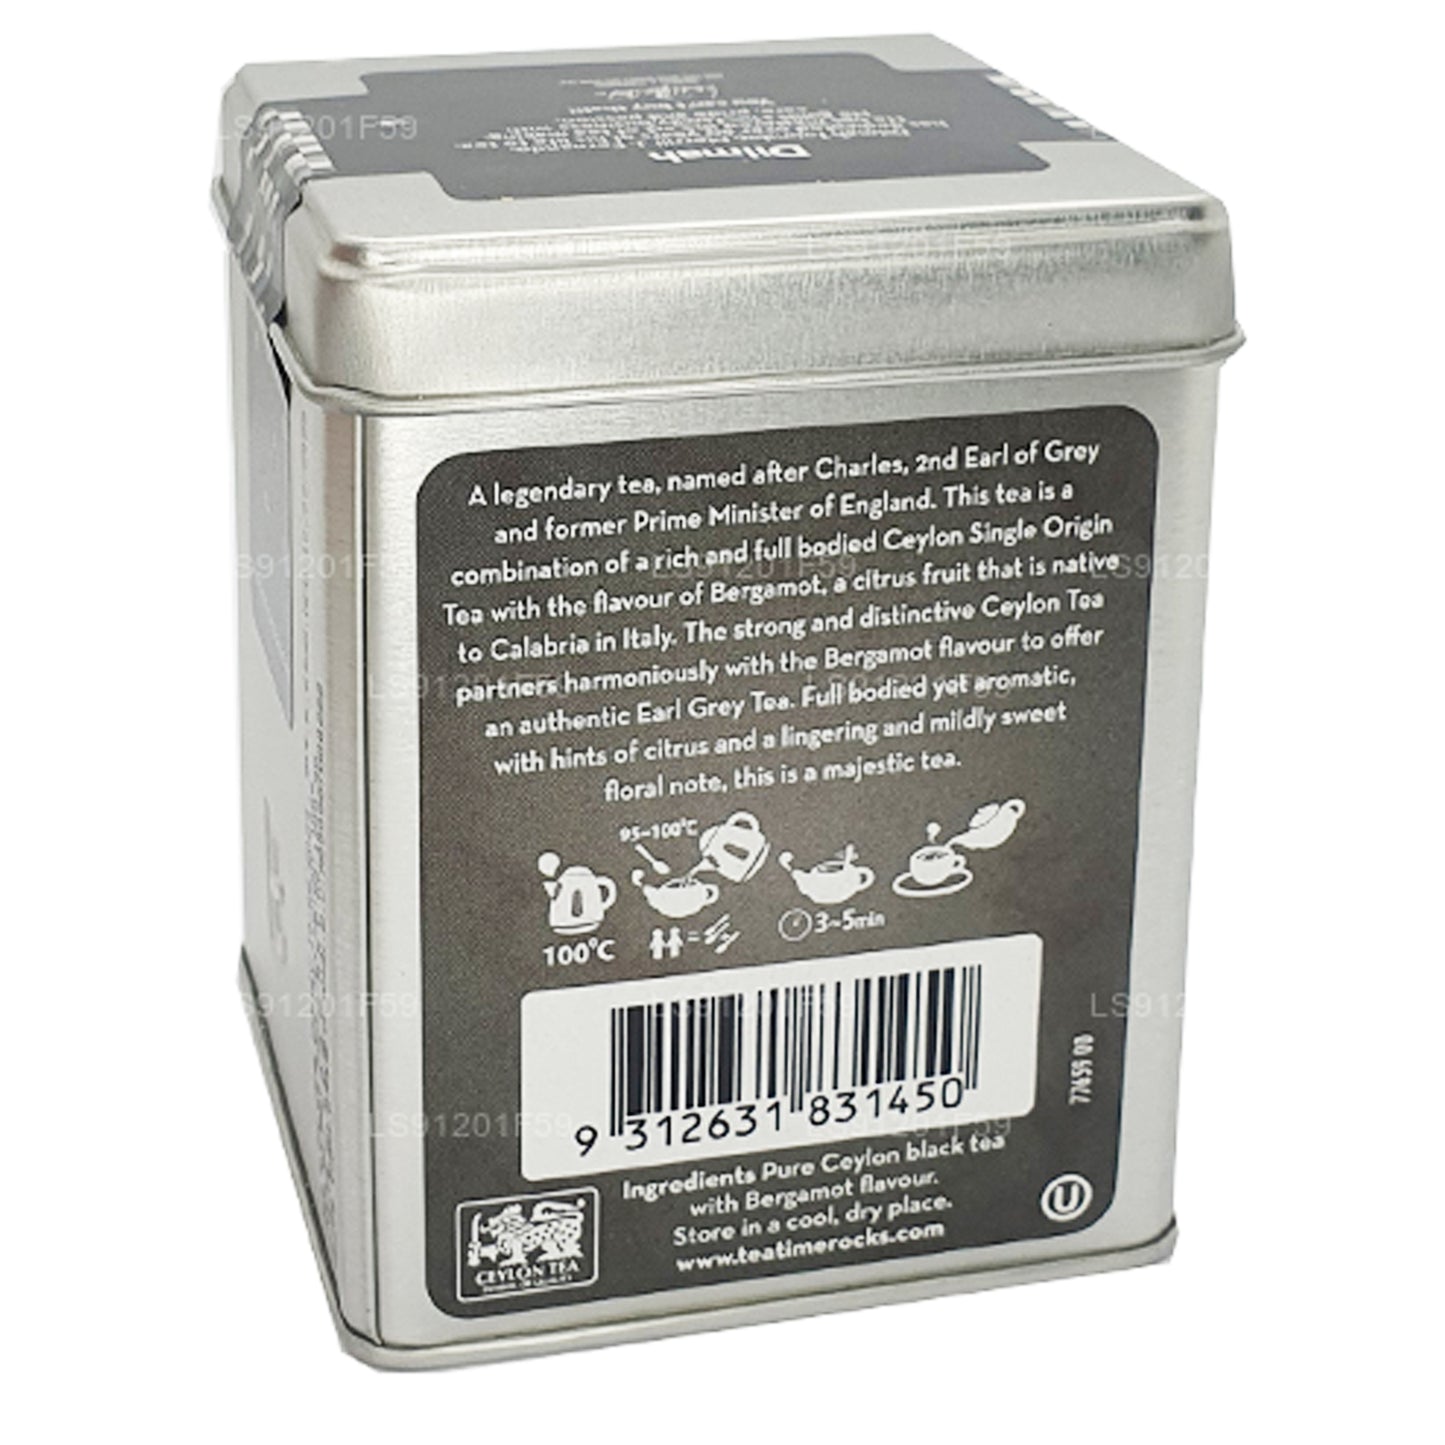 Dilmah T-serie Den originale Earl Grey Loose Leaf Tea (100 g)